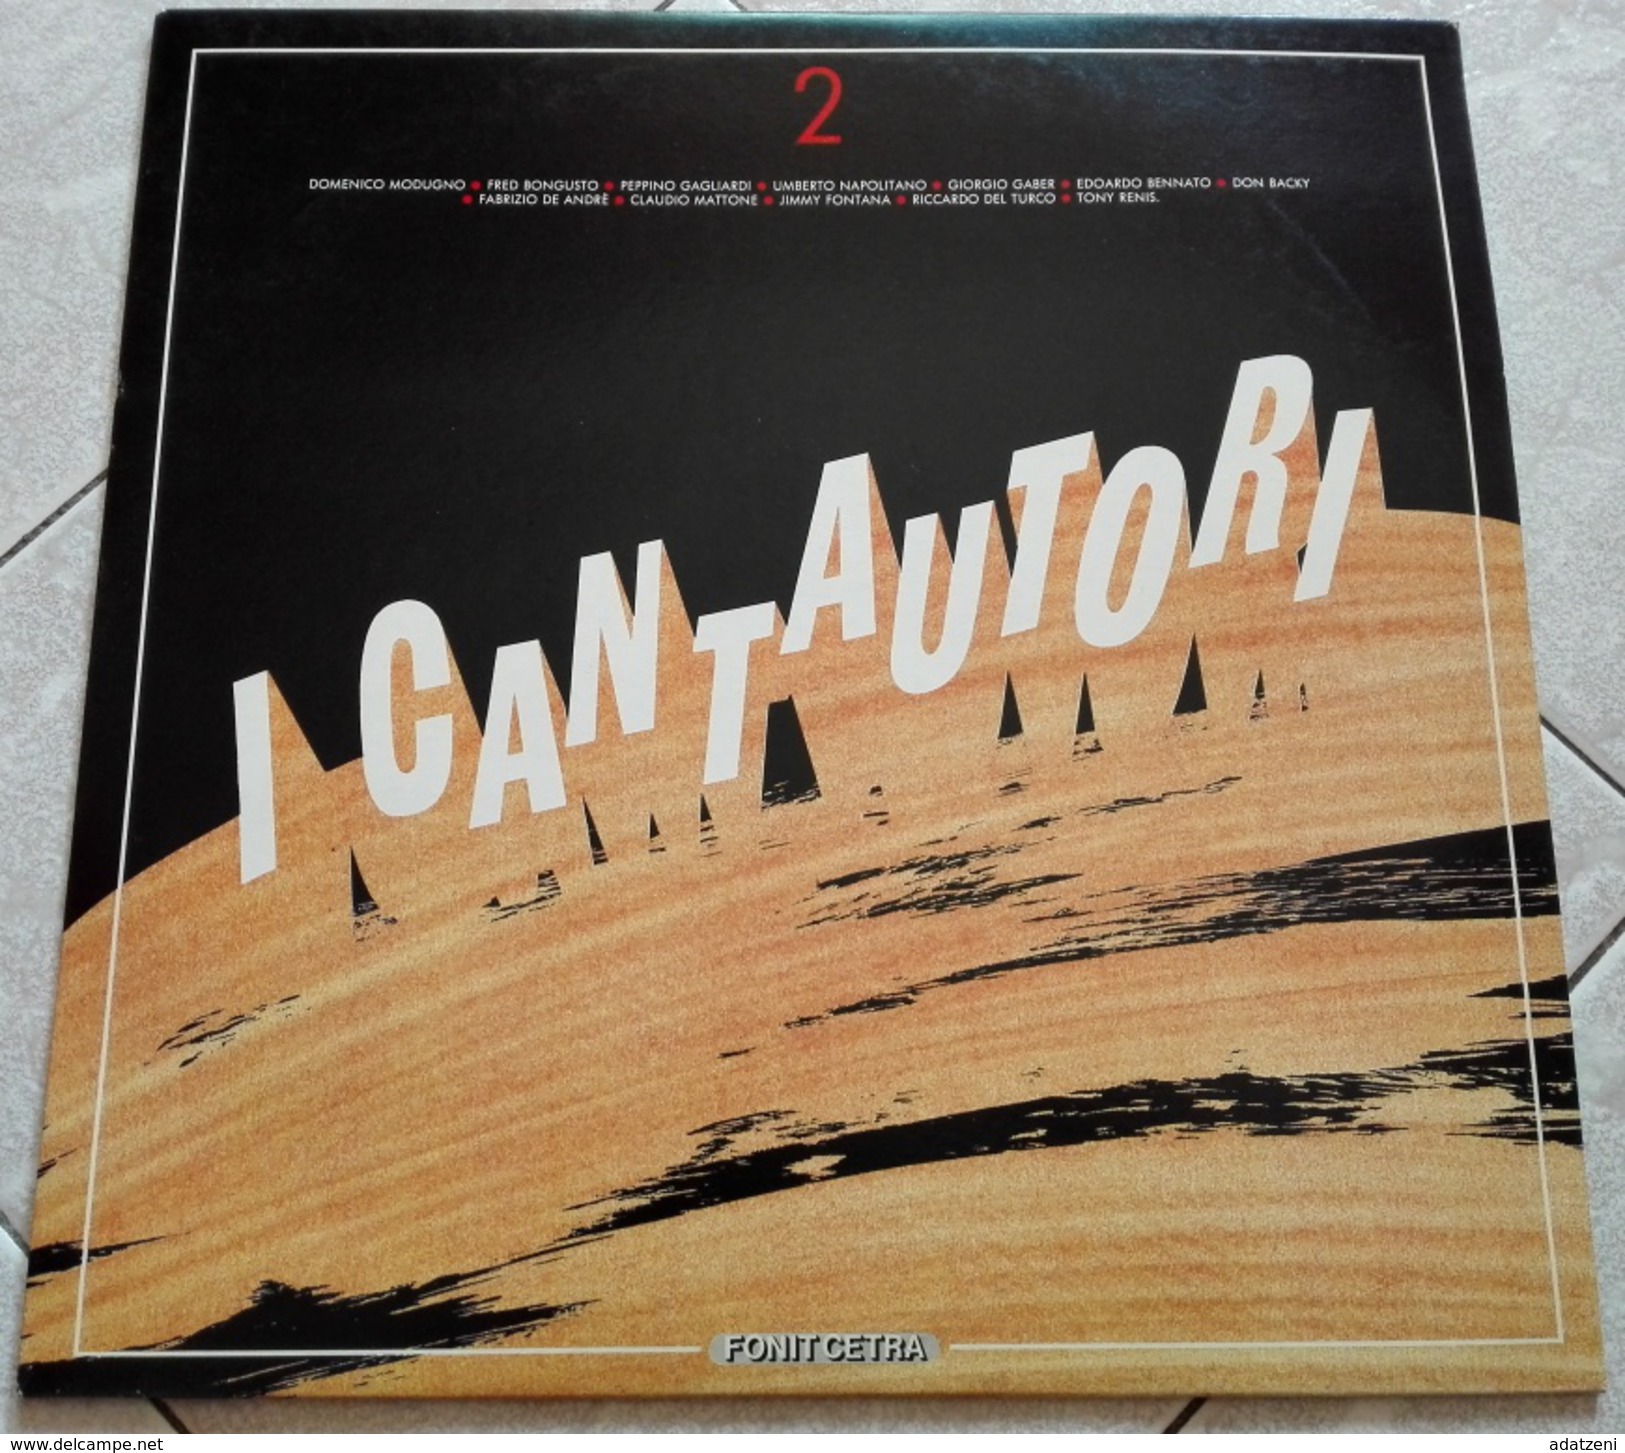 ARTISTI VARI  RACCOLTA I CANTAUTORI VOLUME 2 Disco LP 33 Giri - Autres - Musique Italienne